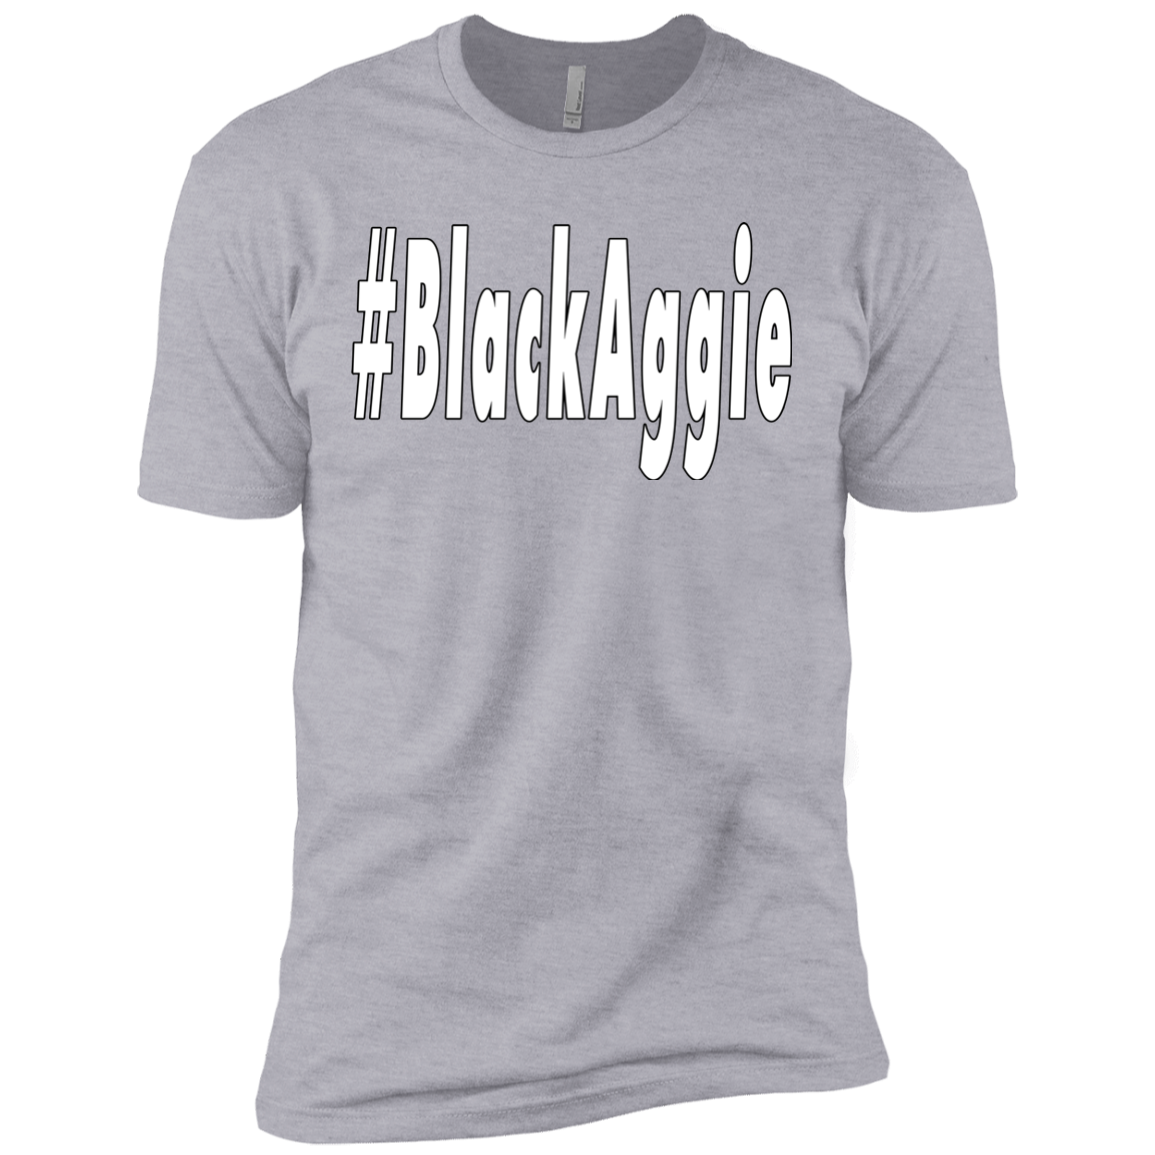 Black Aggie Men's Slim Fit